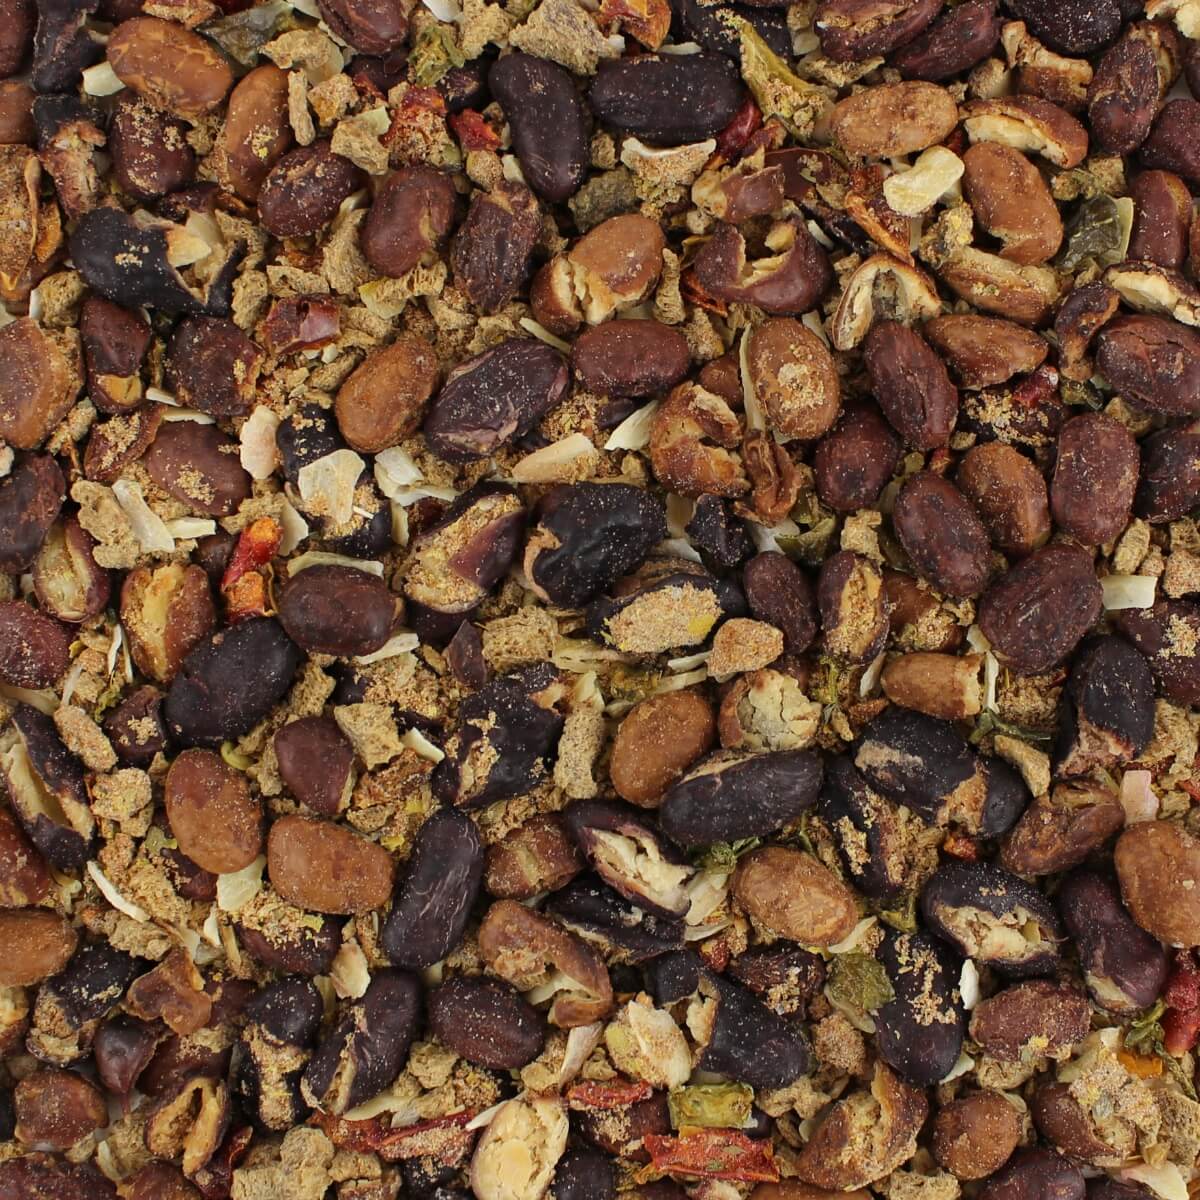 Keywords: nuts, seeds.